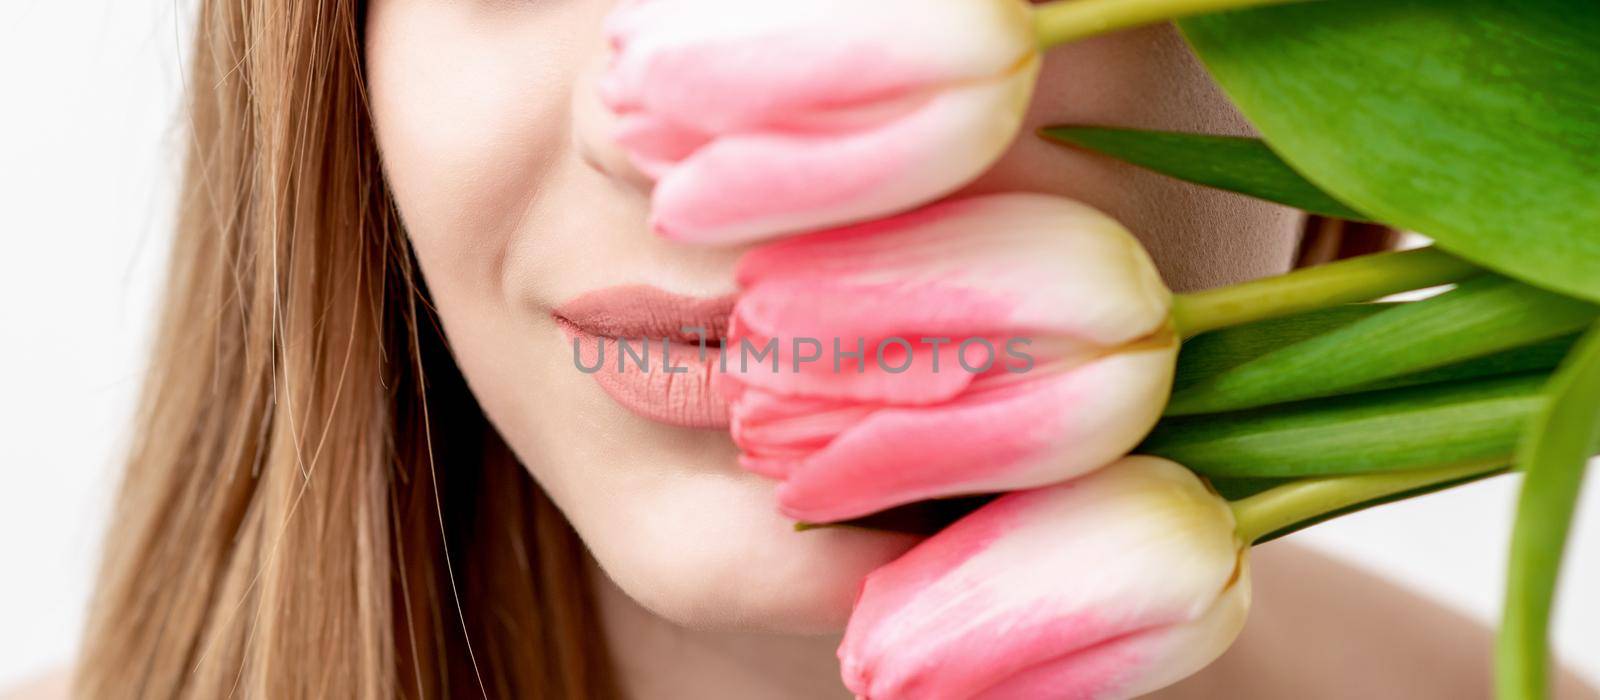 Young woman with pink tulips by okskukuruza